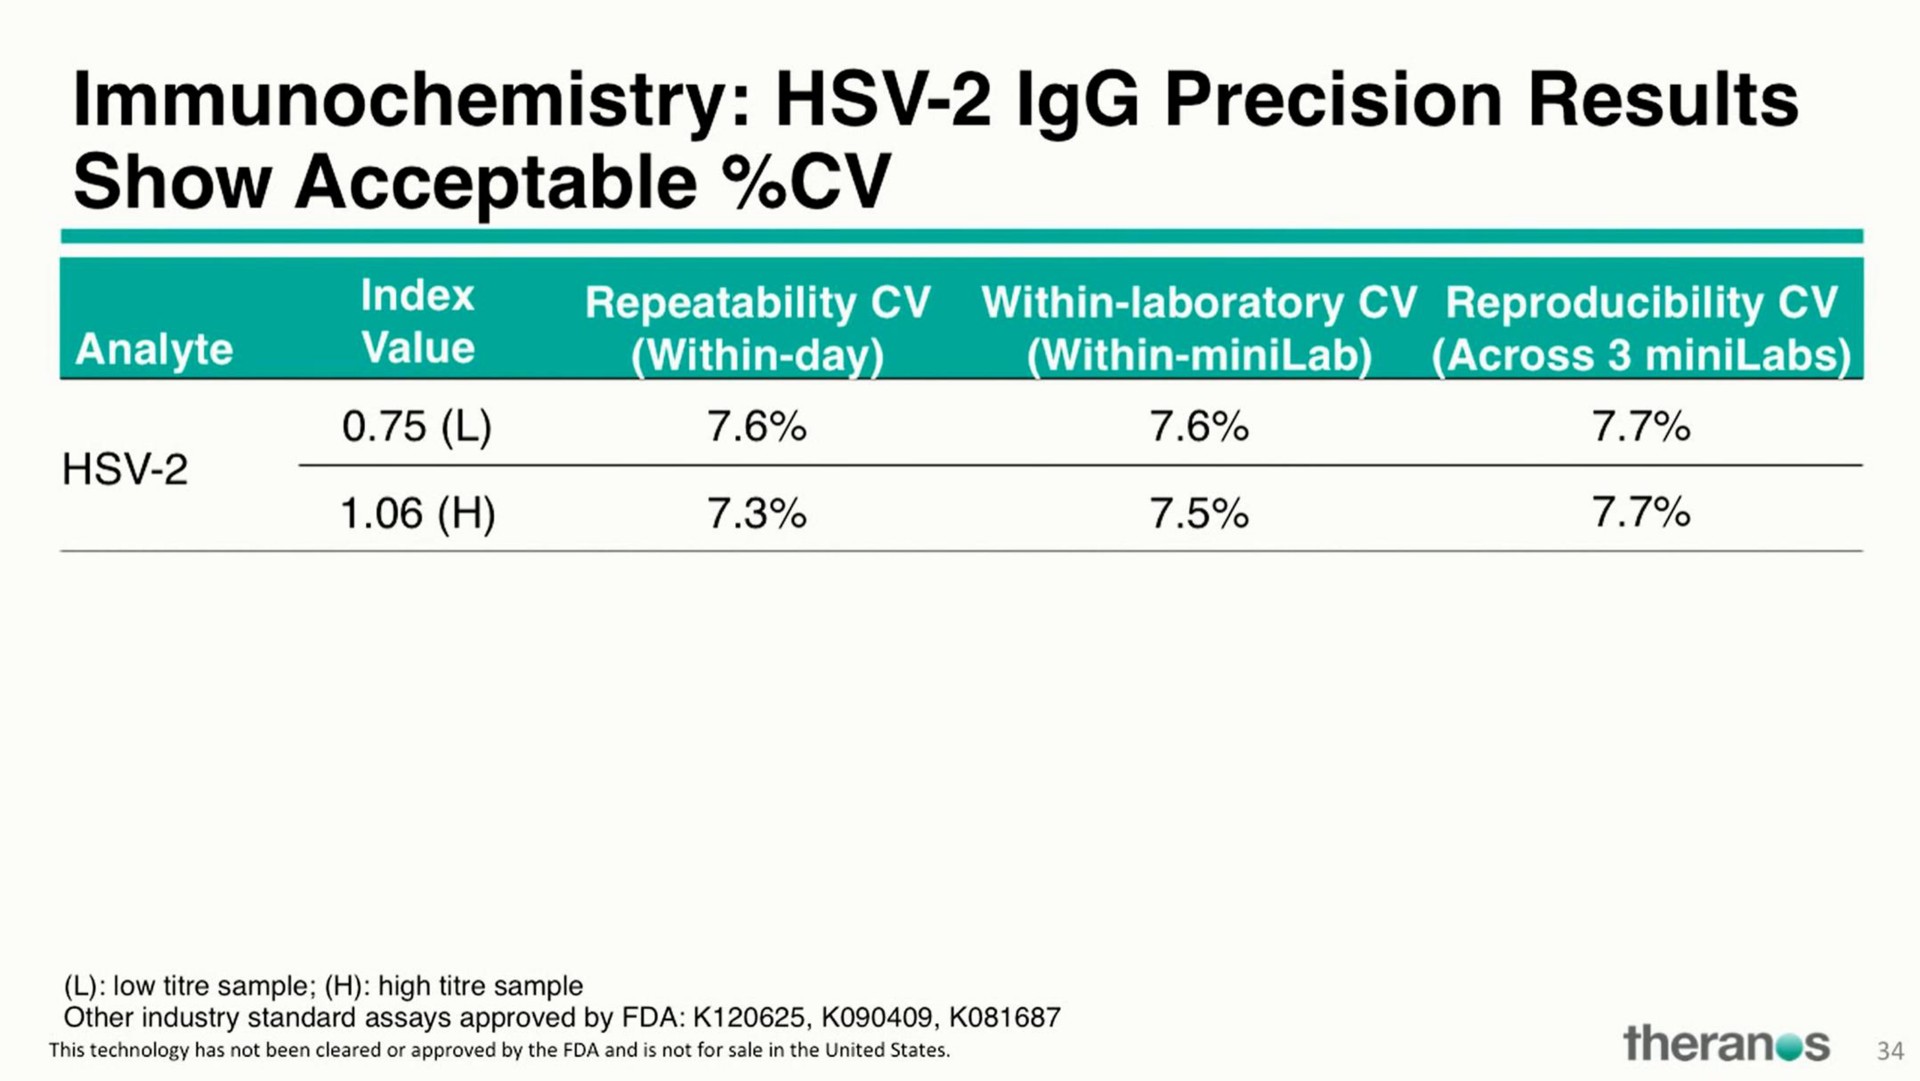 immunochemistry precision results show acceptable | Theranos